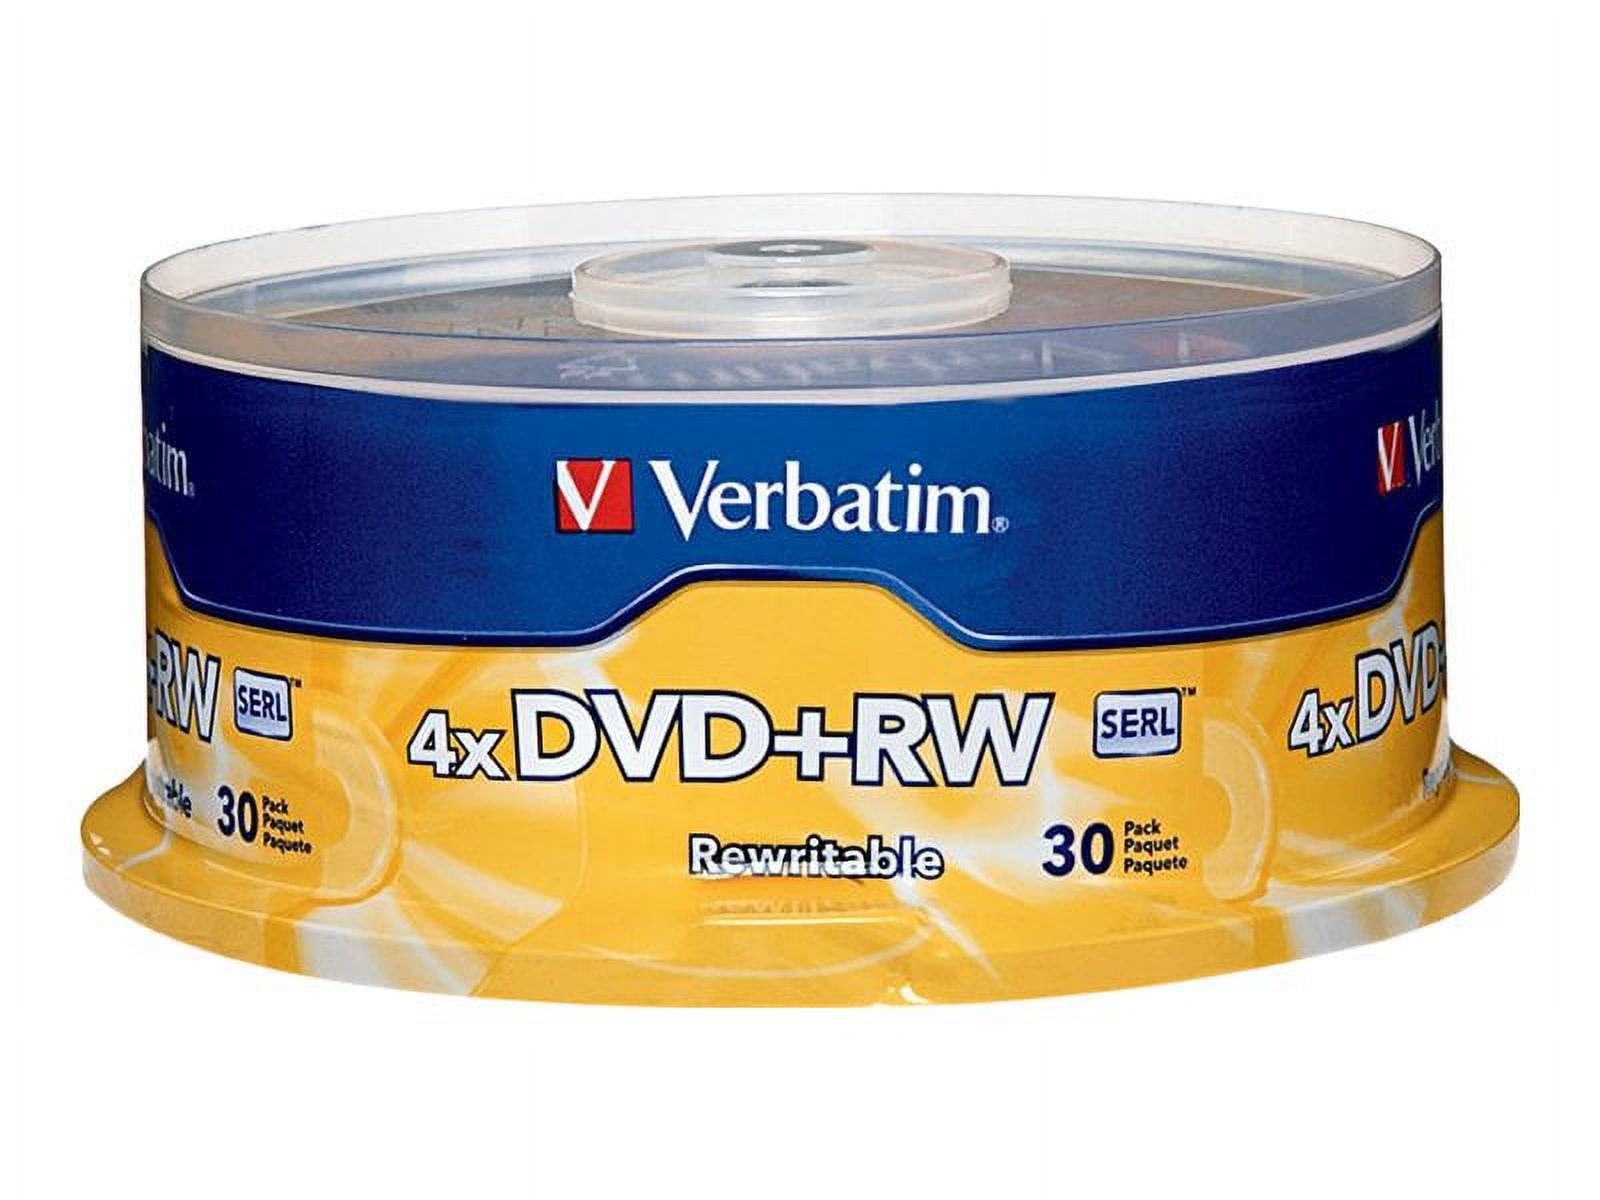 Verbatim, VER94834, 4X DVD+RW Rewritable Discs Spindle, 30, Silver - image 5 of 9